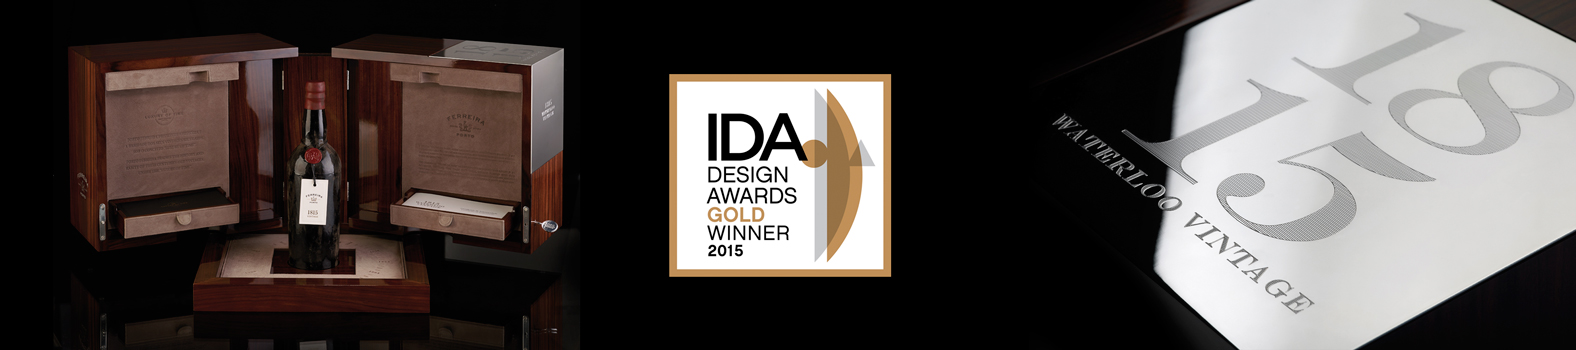 Omdesign receives 8 awards in USA